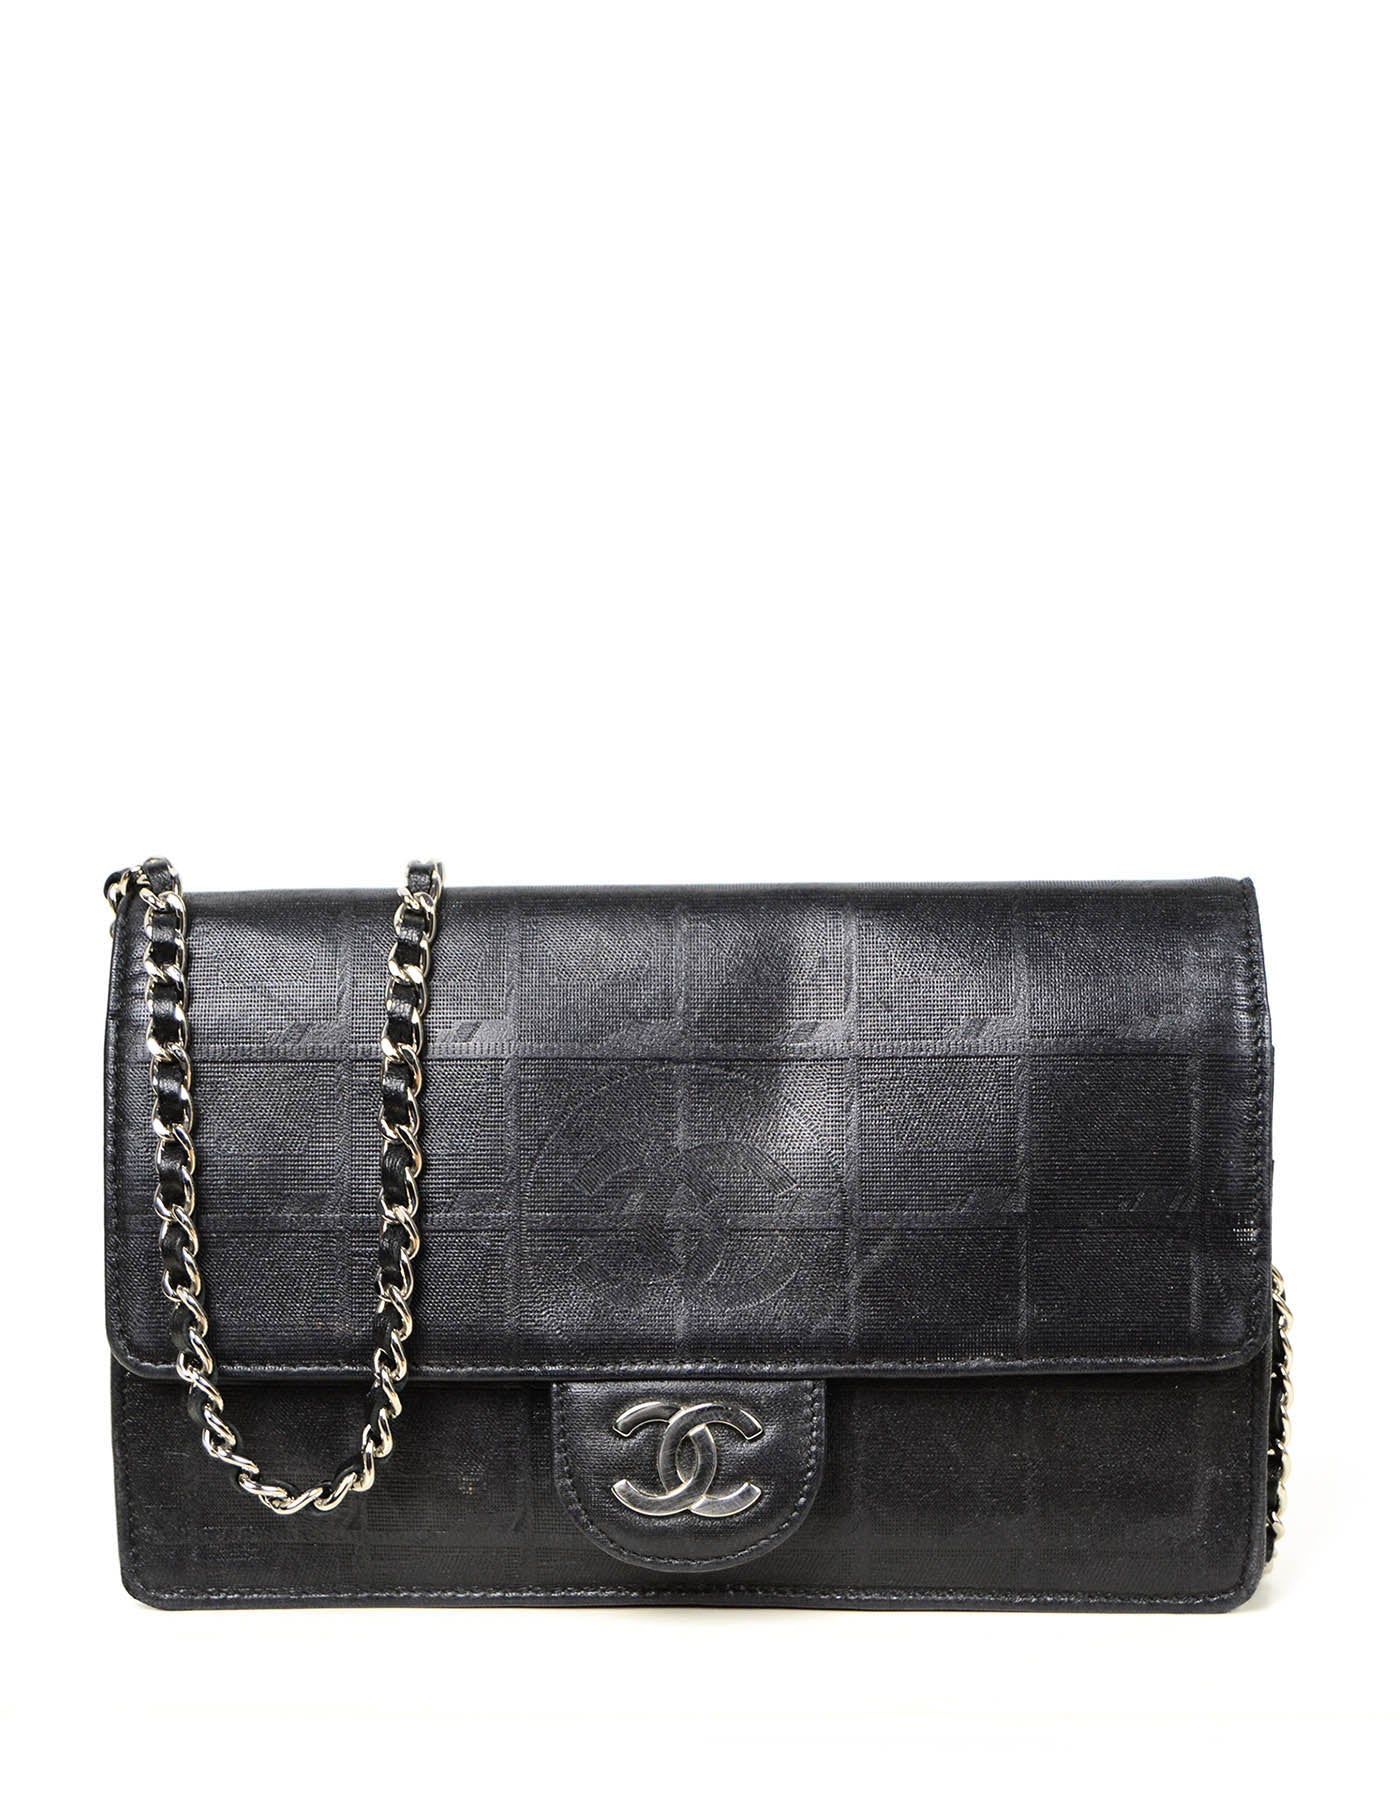 Chanel Black Nylon Travel Ligne Wallet on Chain WOC Crossbody Bag